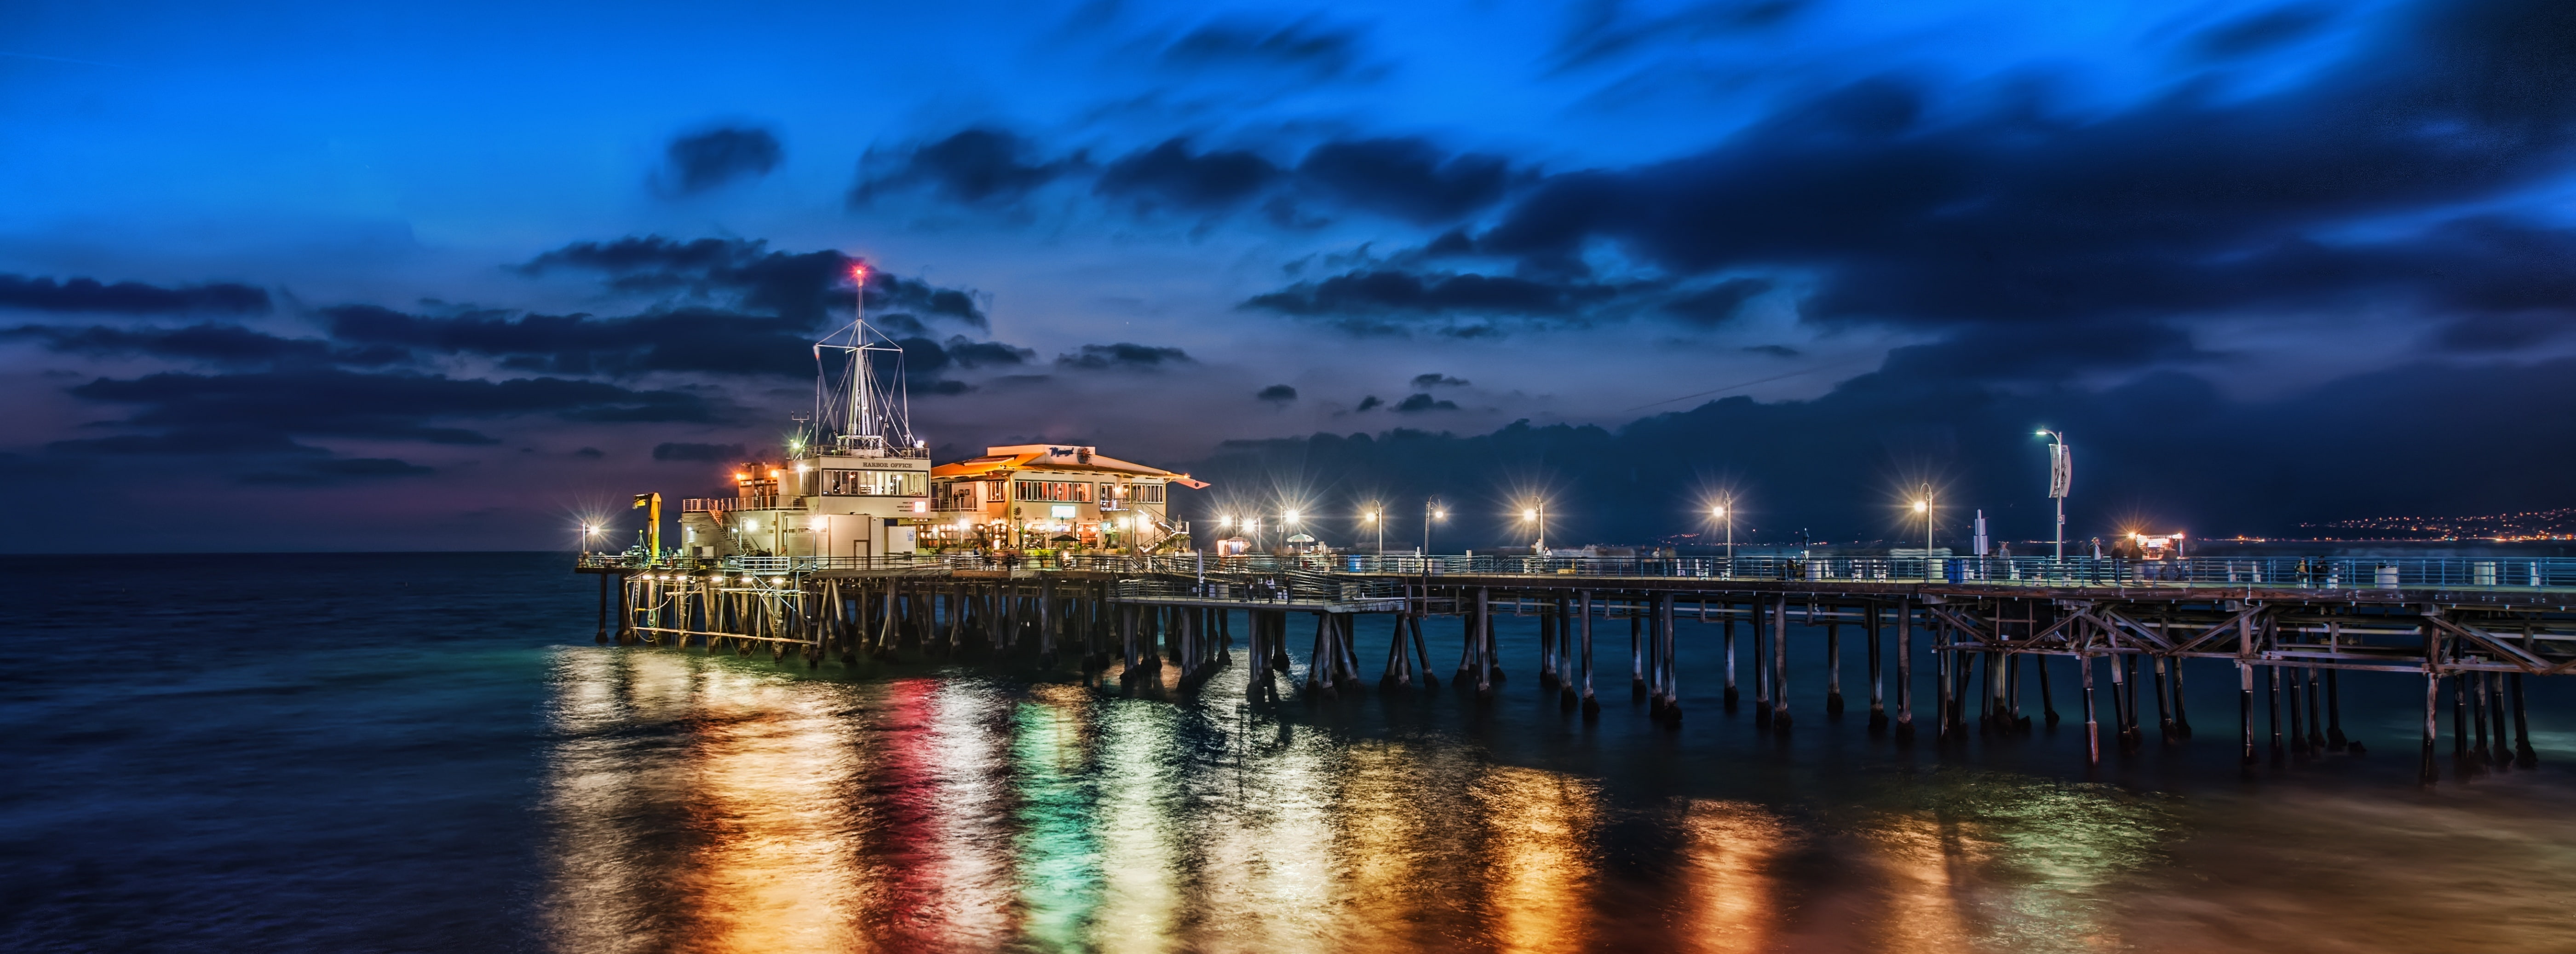 The Pier In Santa Monica HD Wallpaper, grey dock with lights digital wallpaper